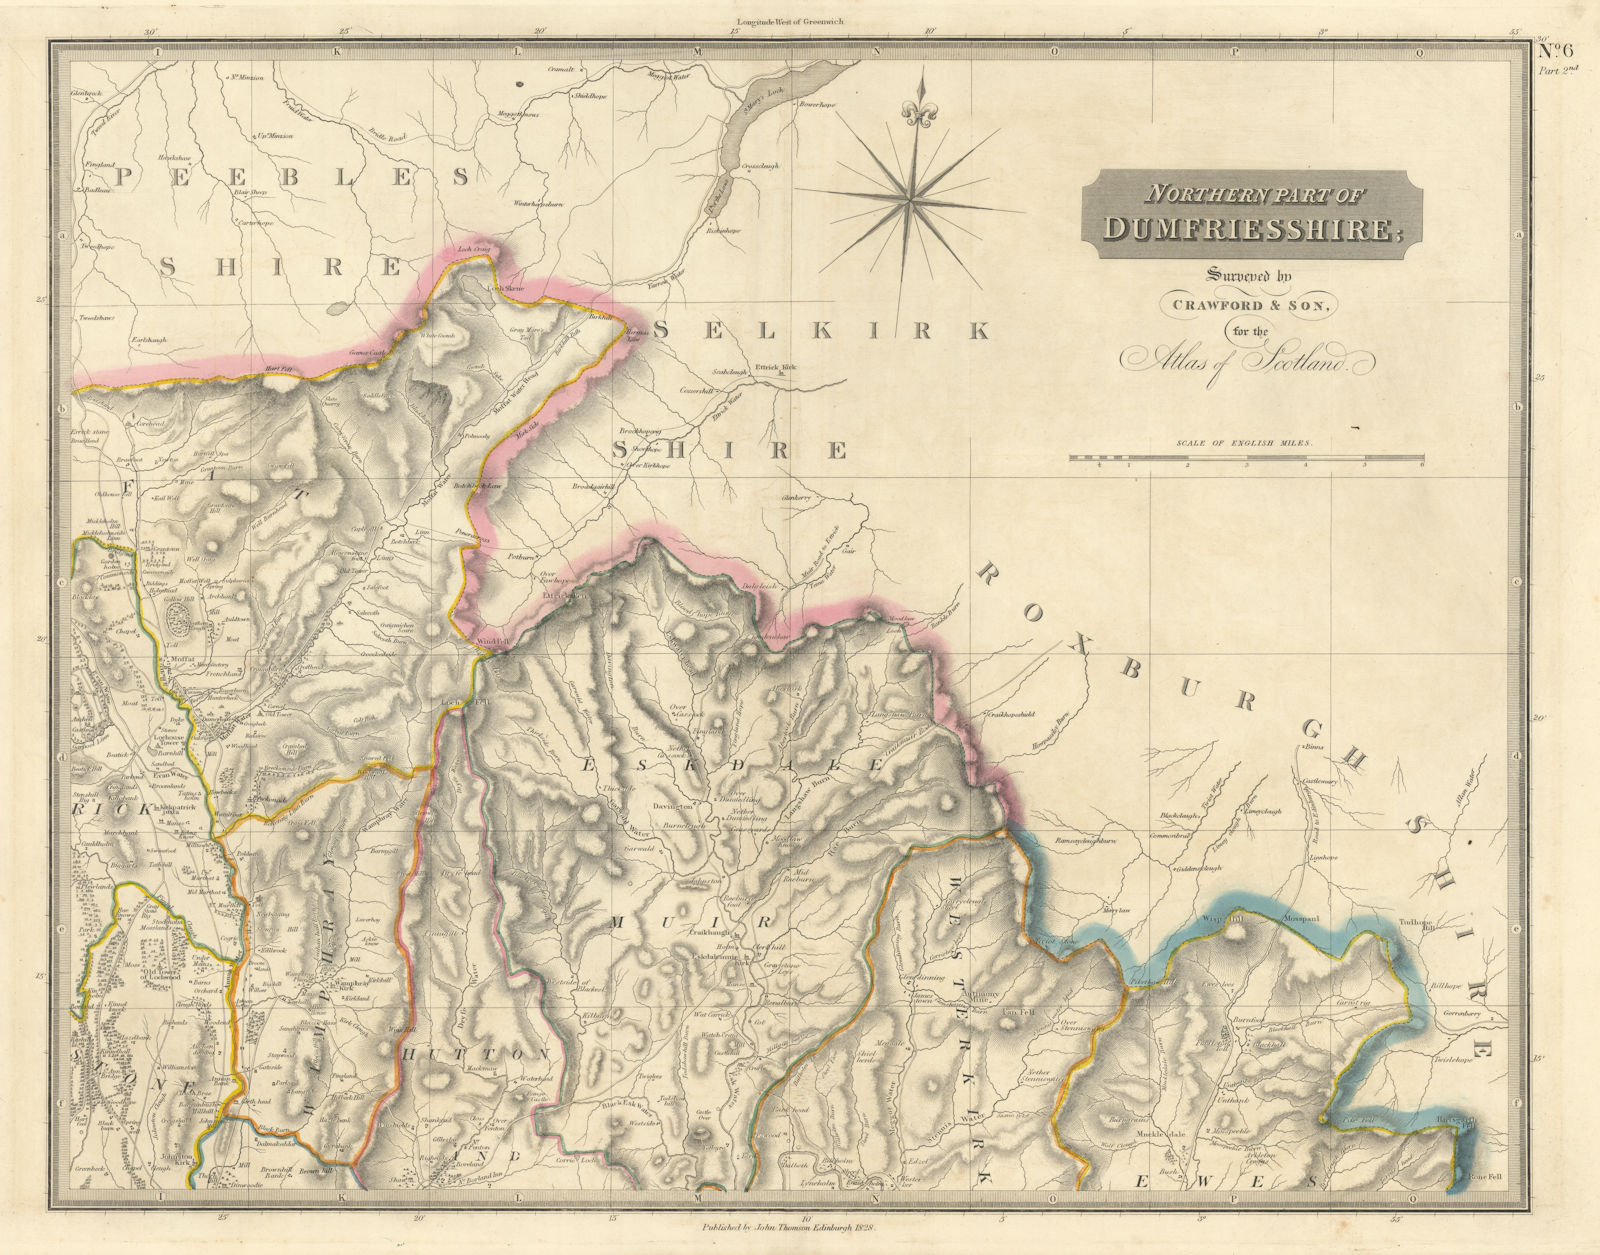 Dumfrieshire north-east sheet. Moffat Ettrick Beattock. THOMSON 1832 old map